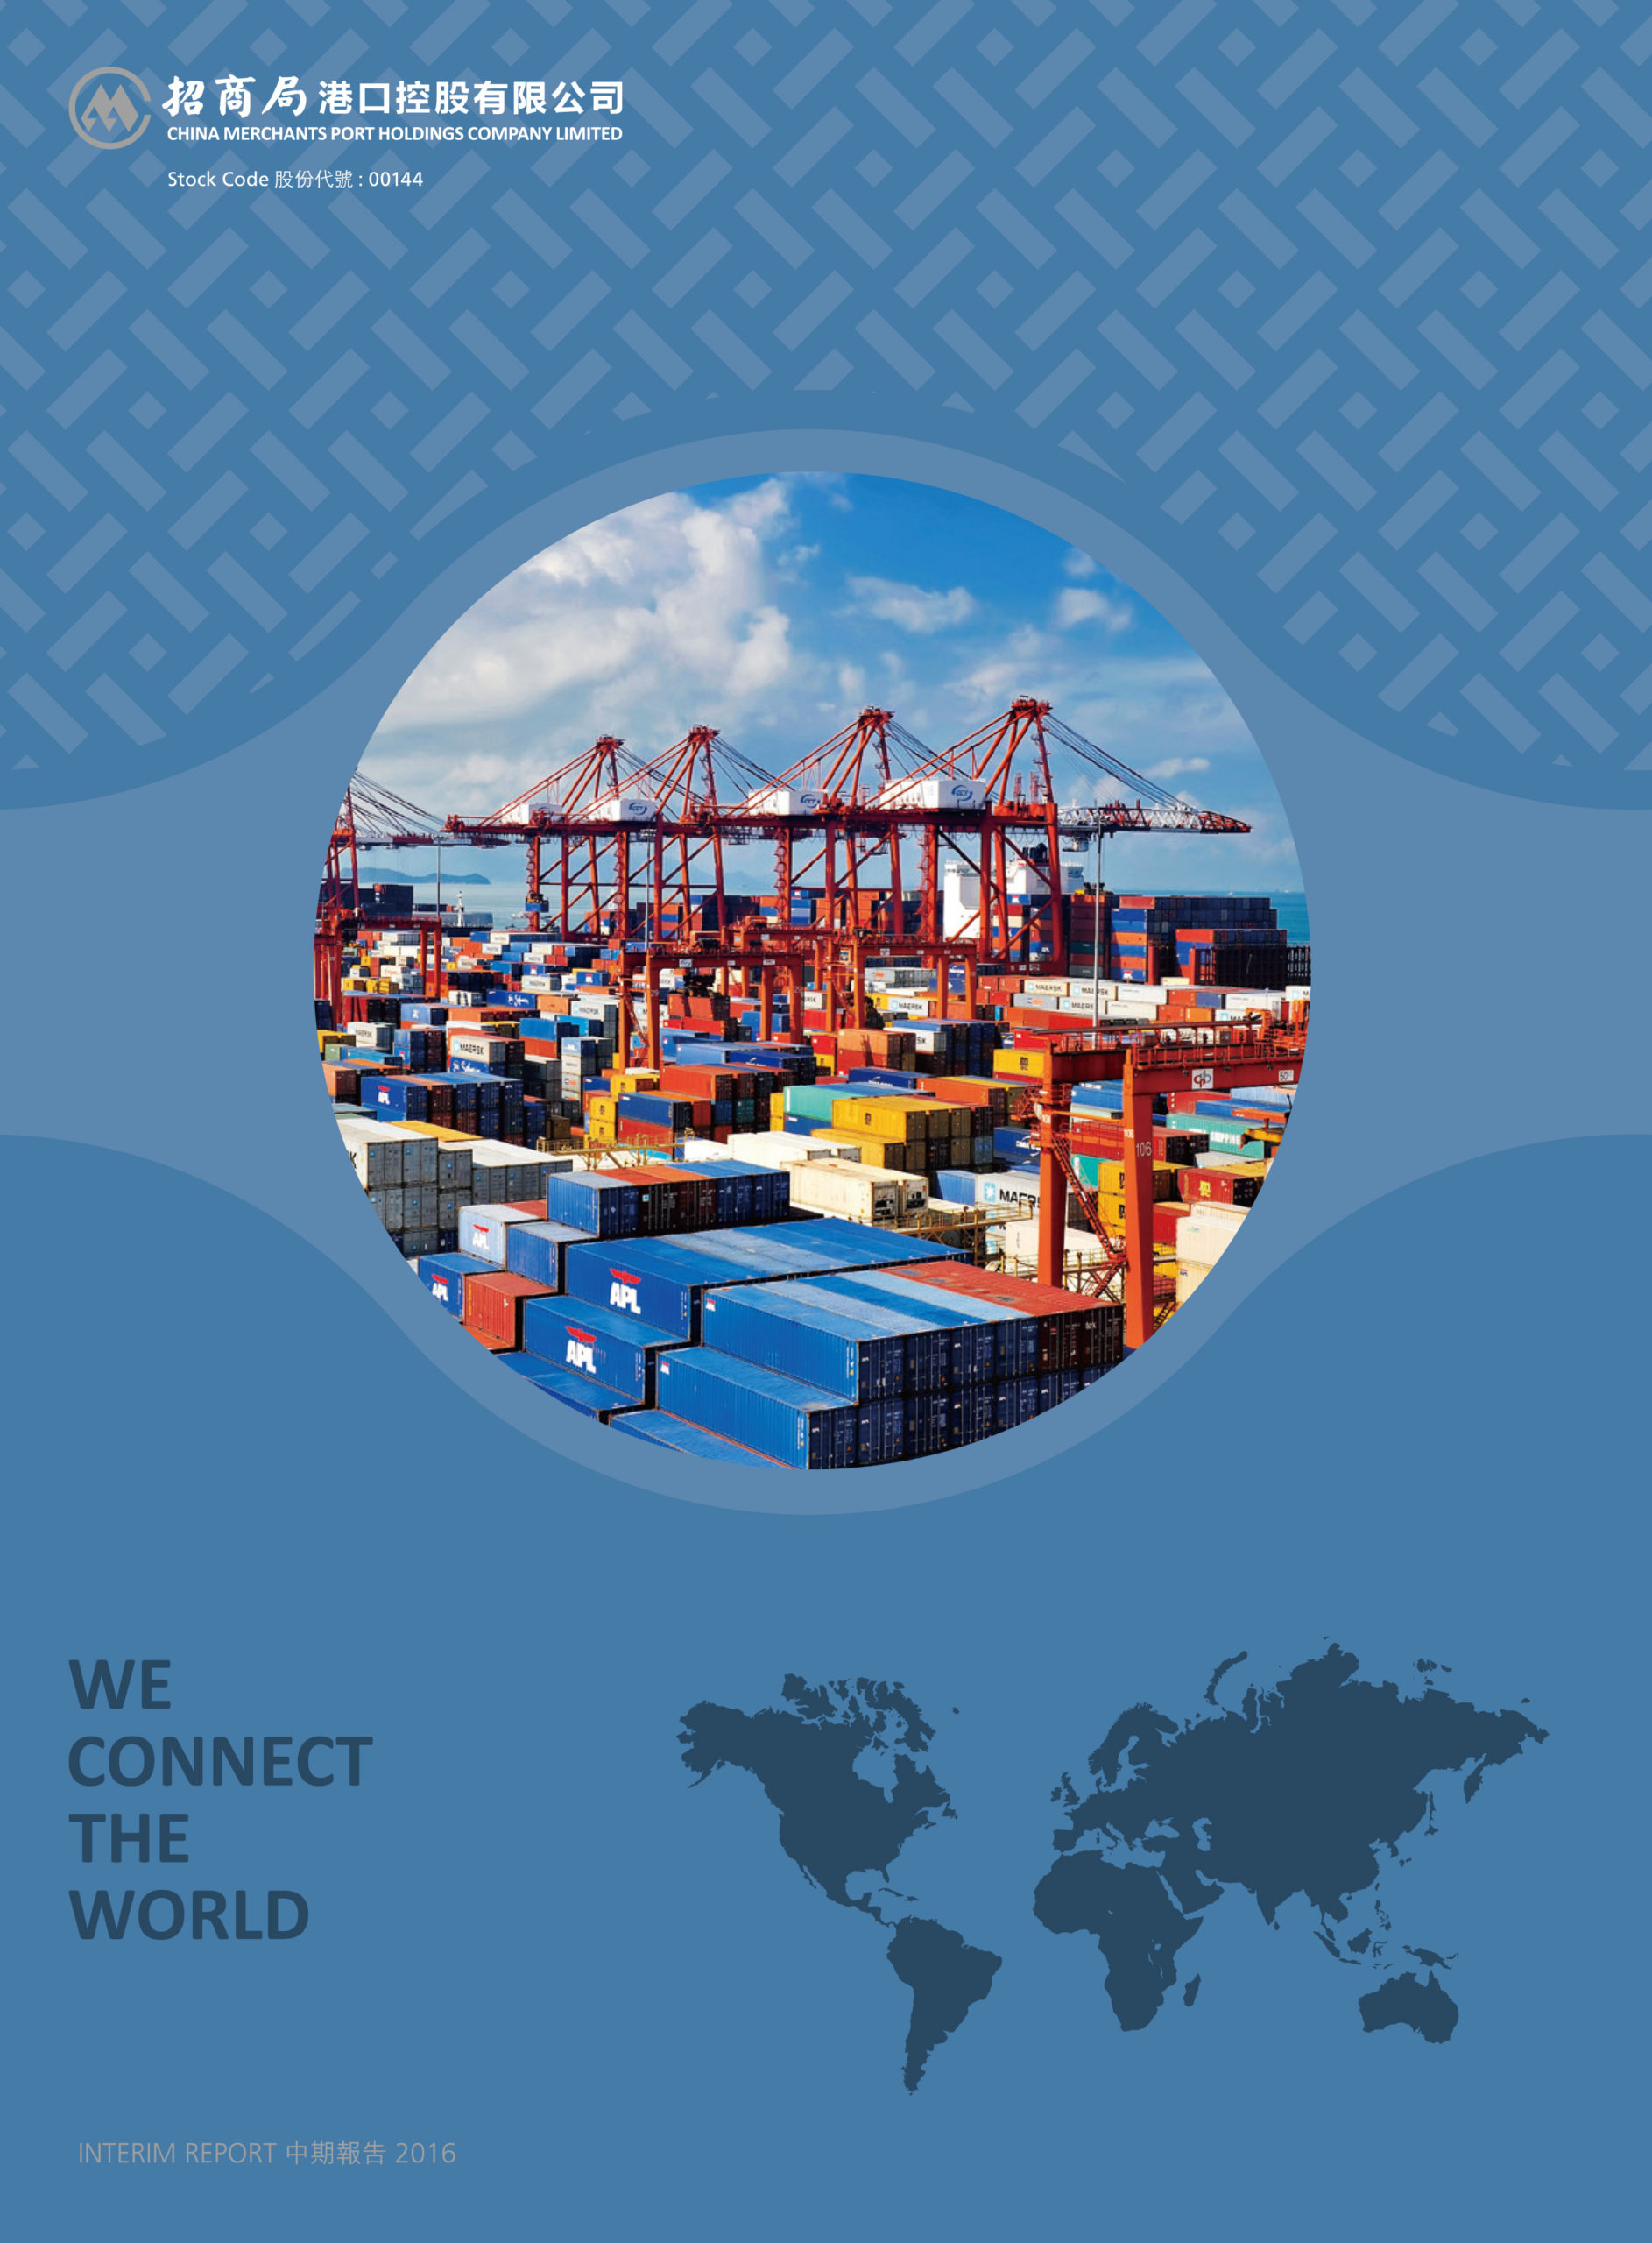 China Merchants Port Holdings Company Limited